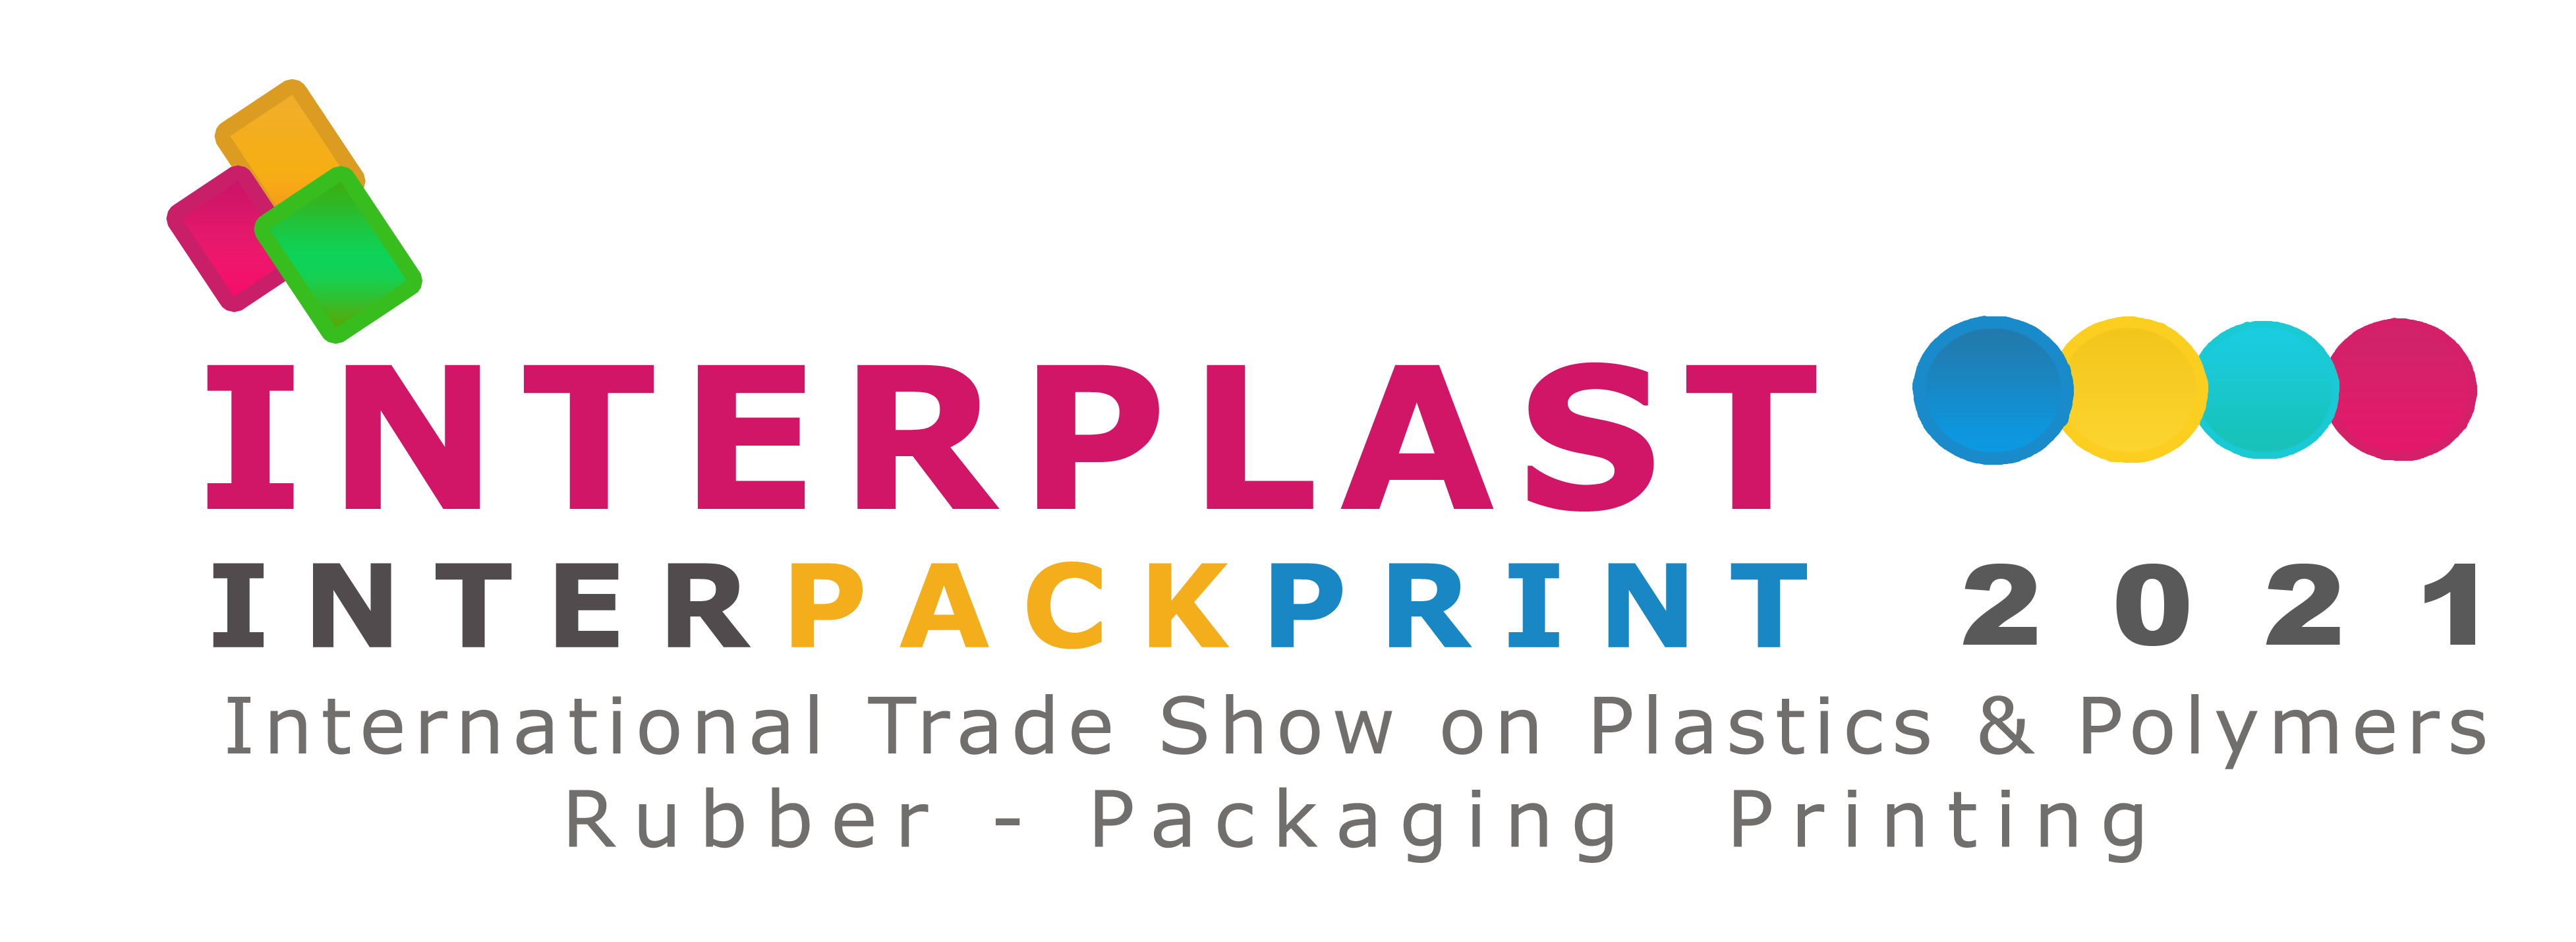 Interplast PackPrint